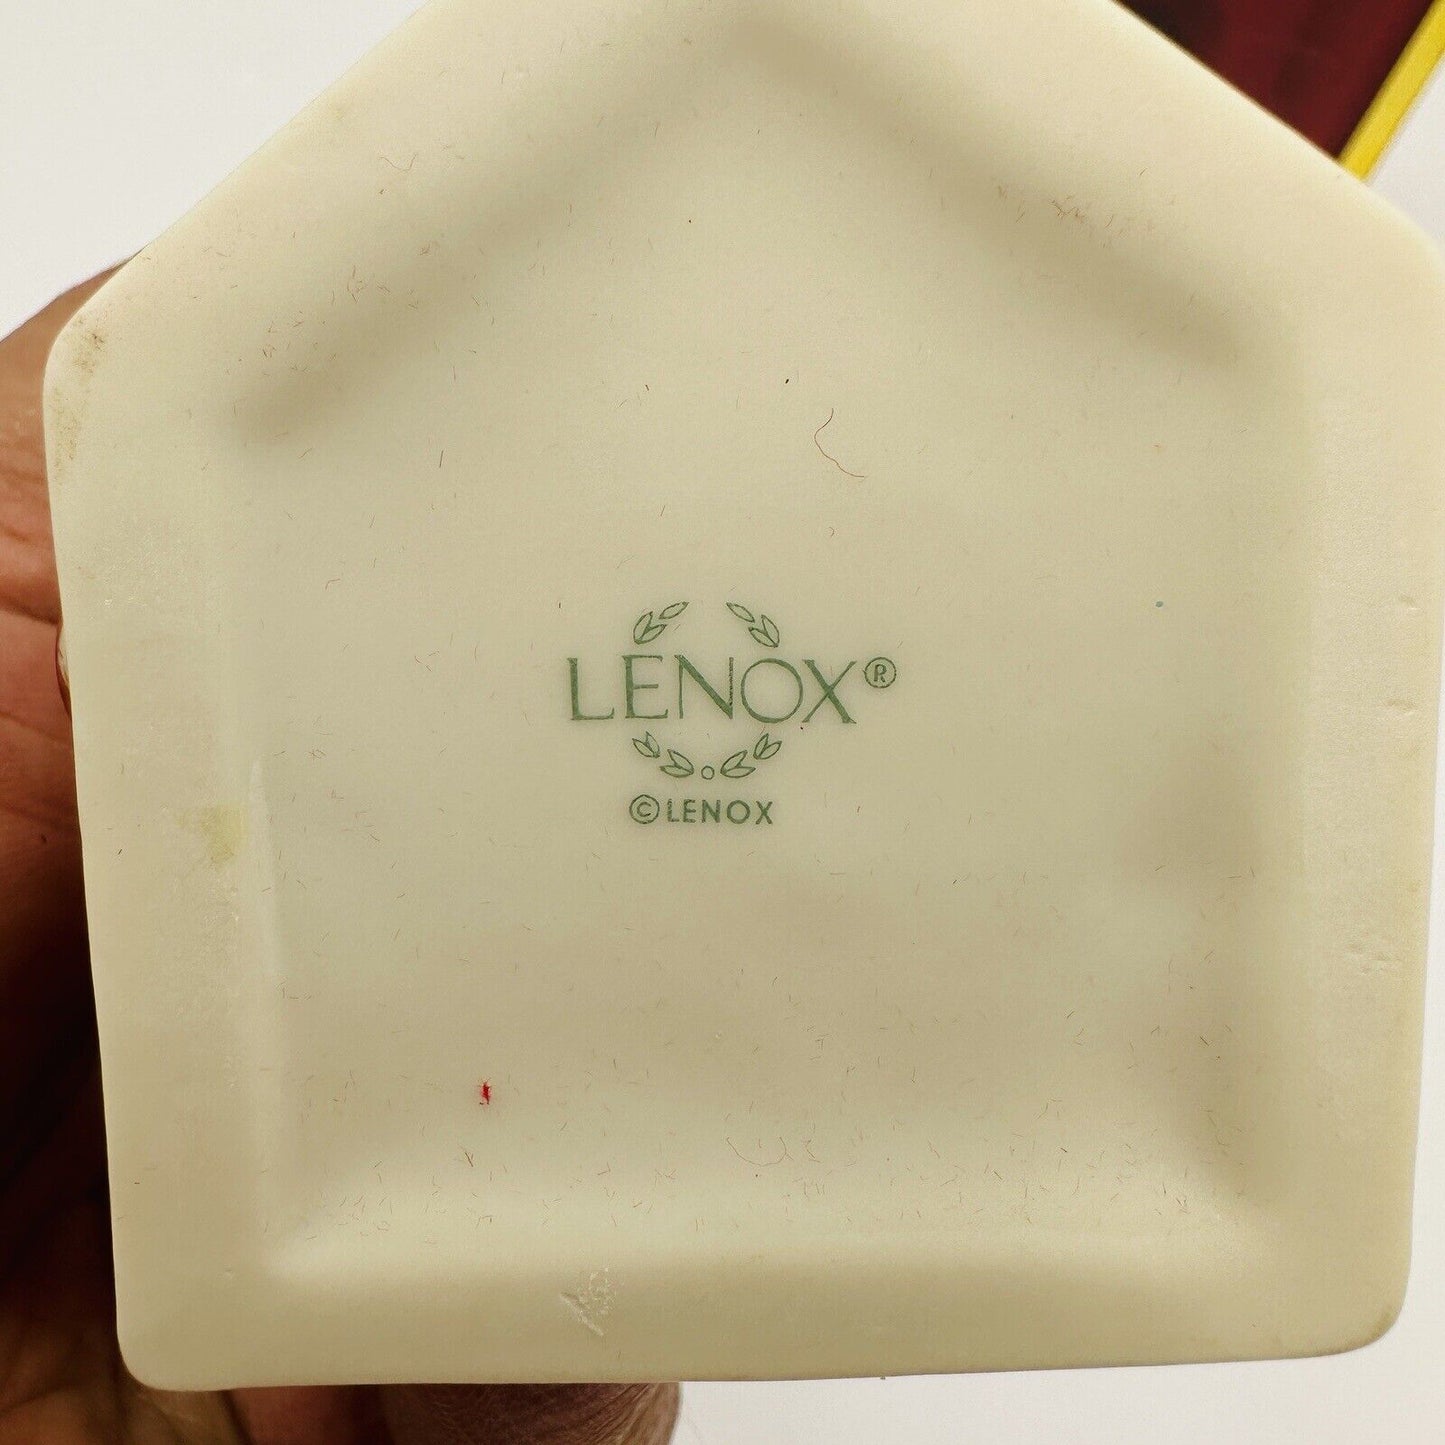 Lenox Ornament Baseball Santa Christmas Figurine Sport Porcelain Box